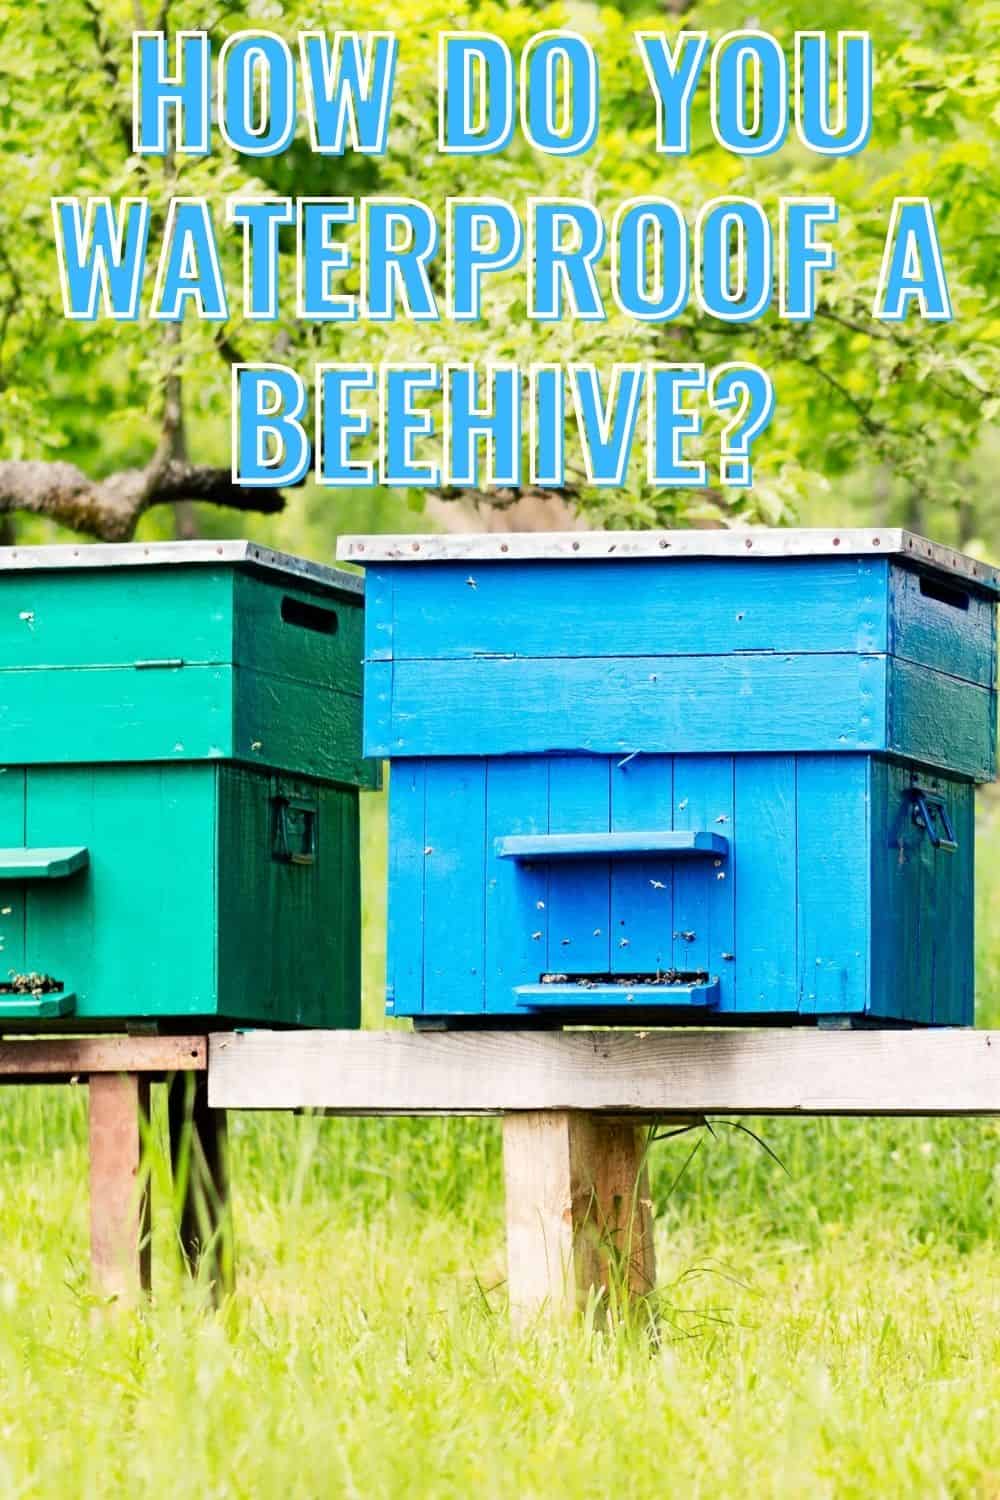 How do you waterproof a beehive